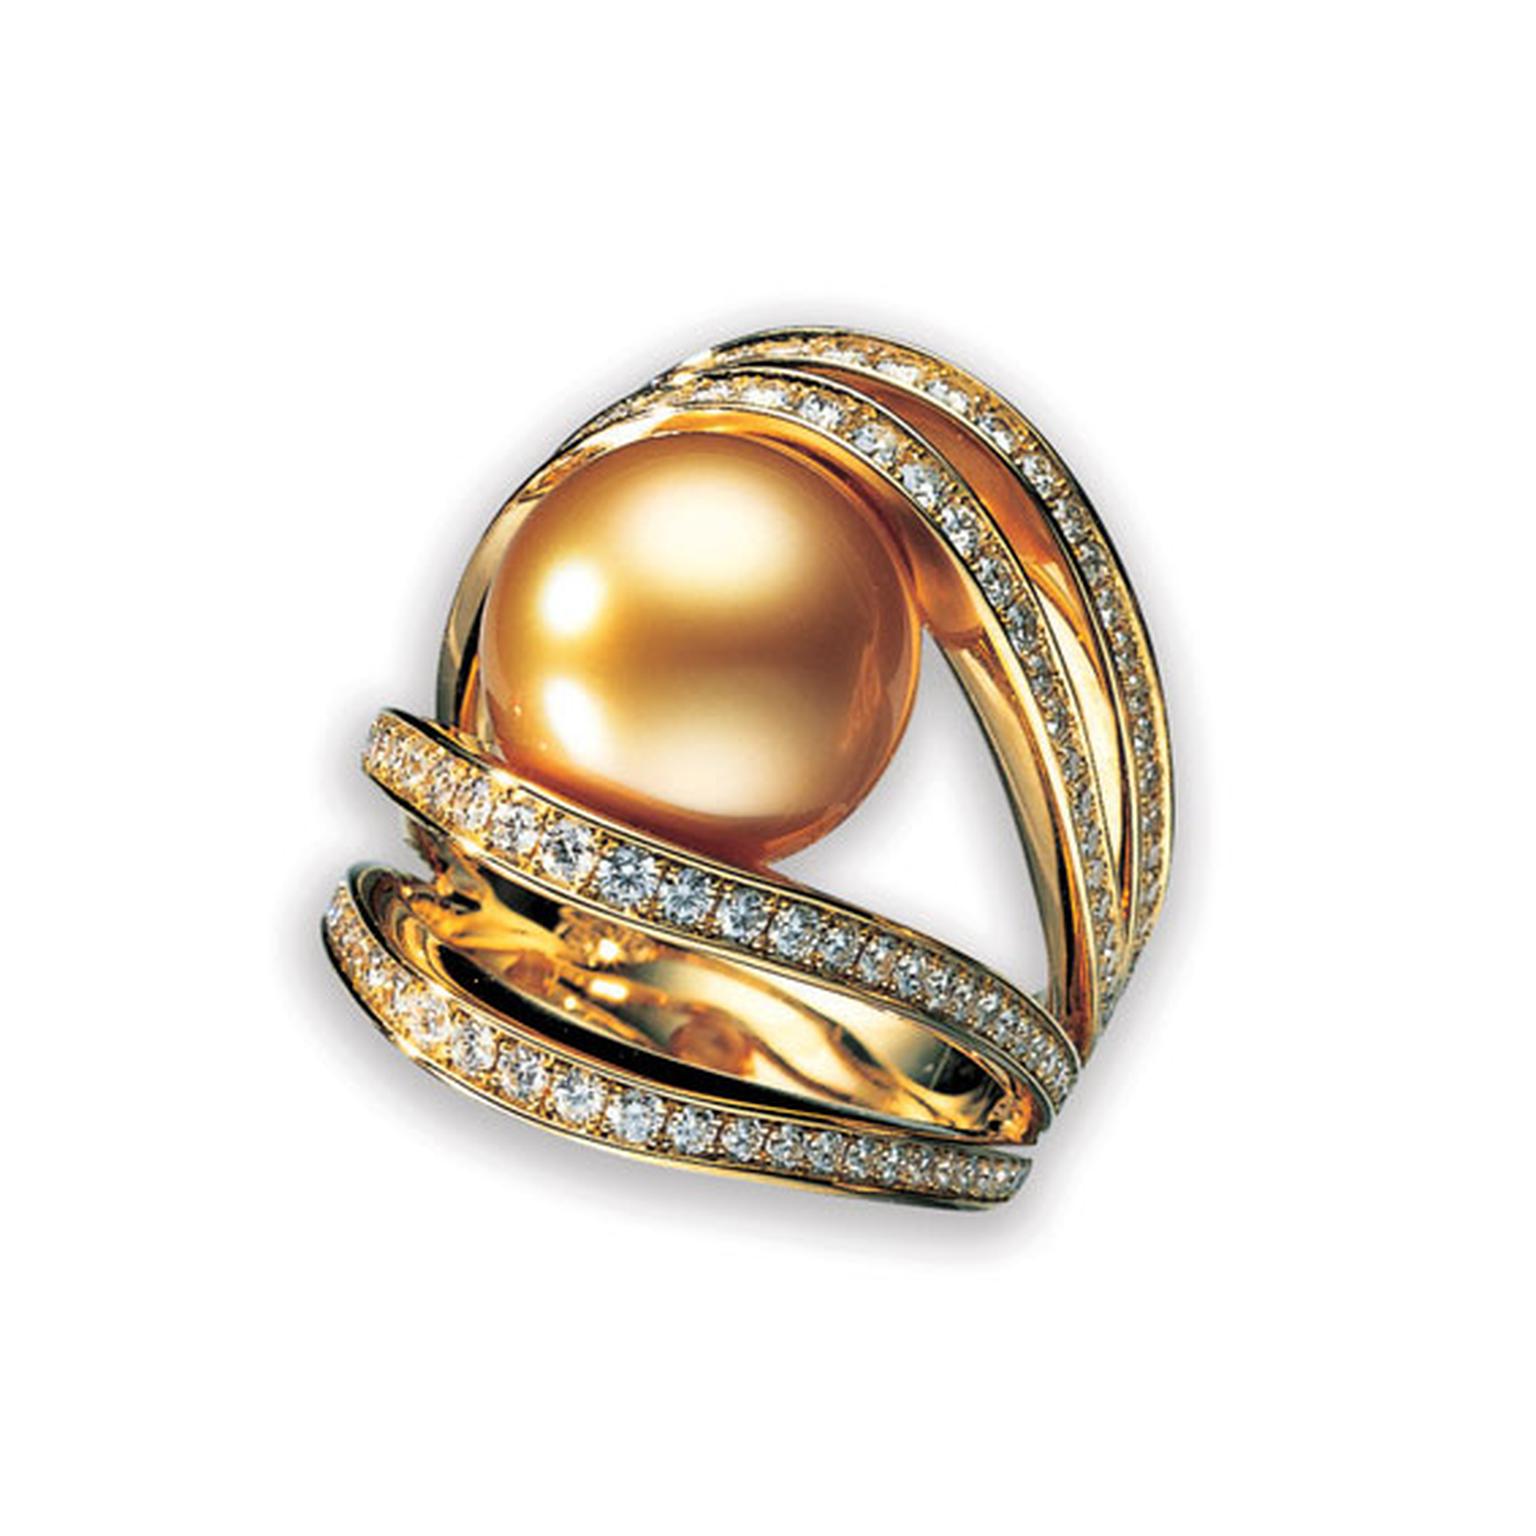 Mikimoto pearl ring